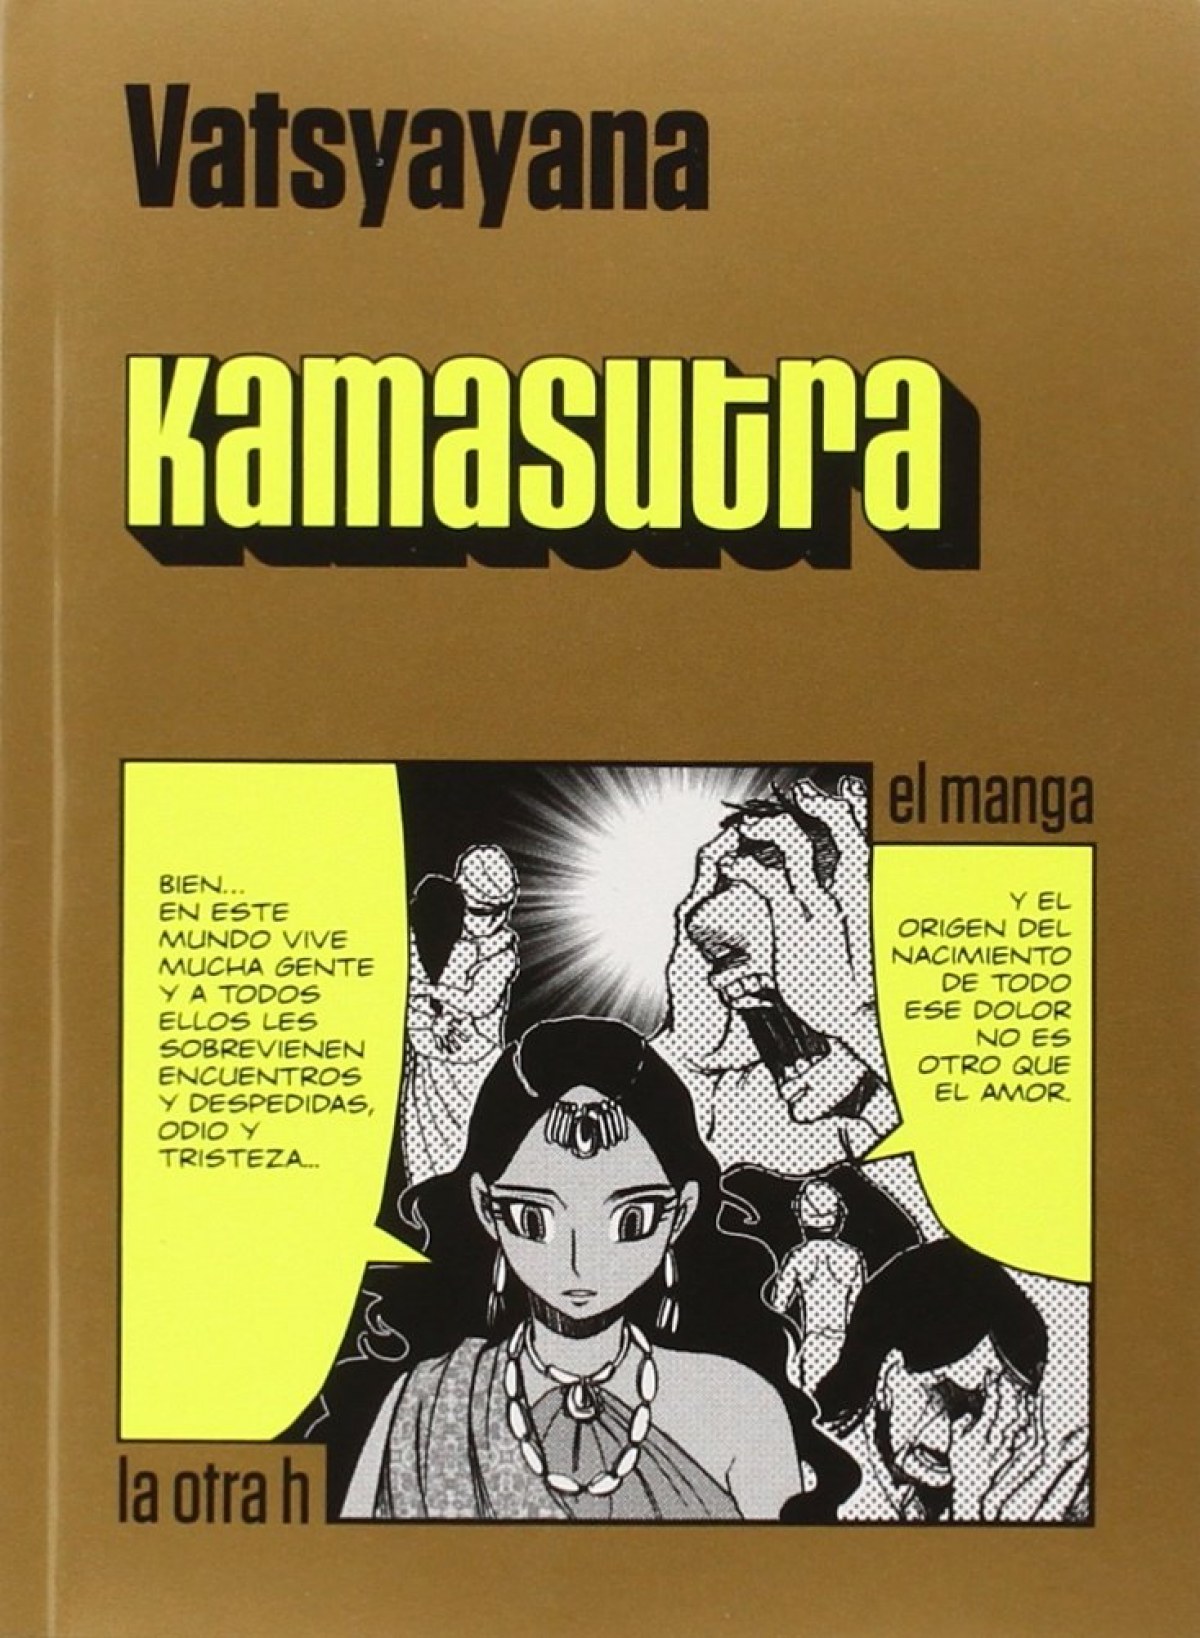 Kamasutra El manga - Vatsyayana